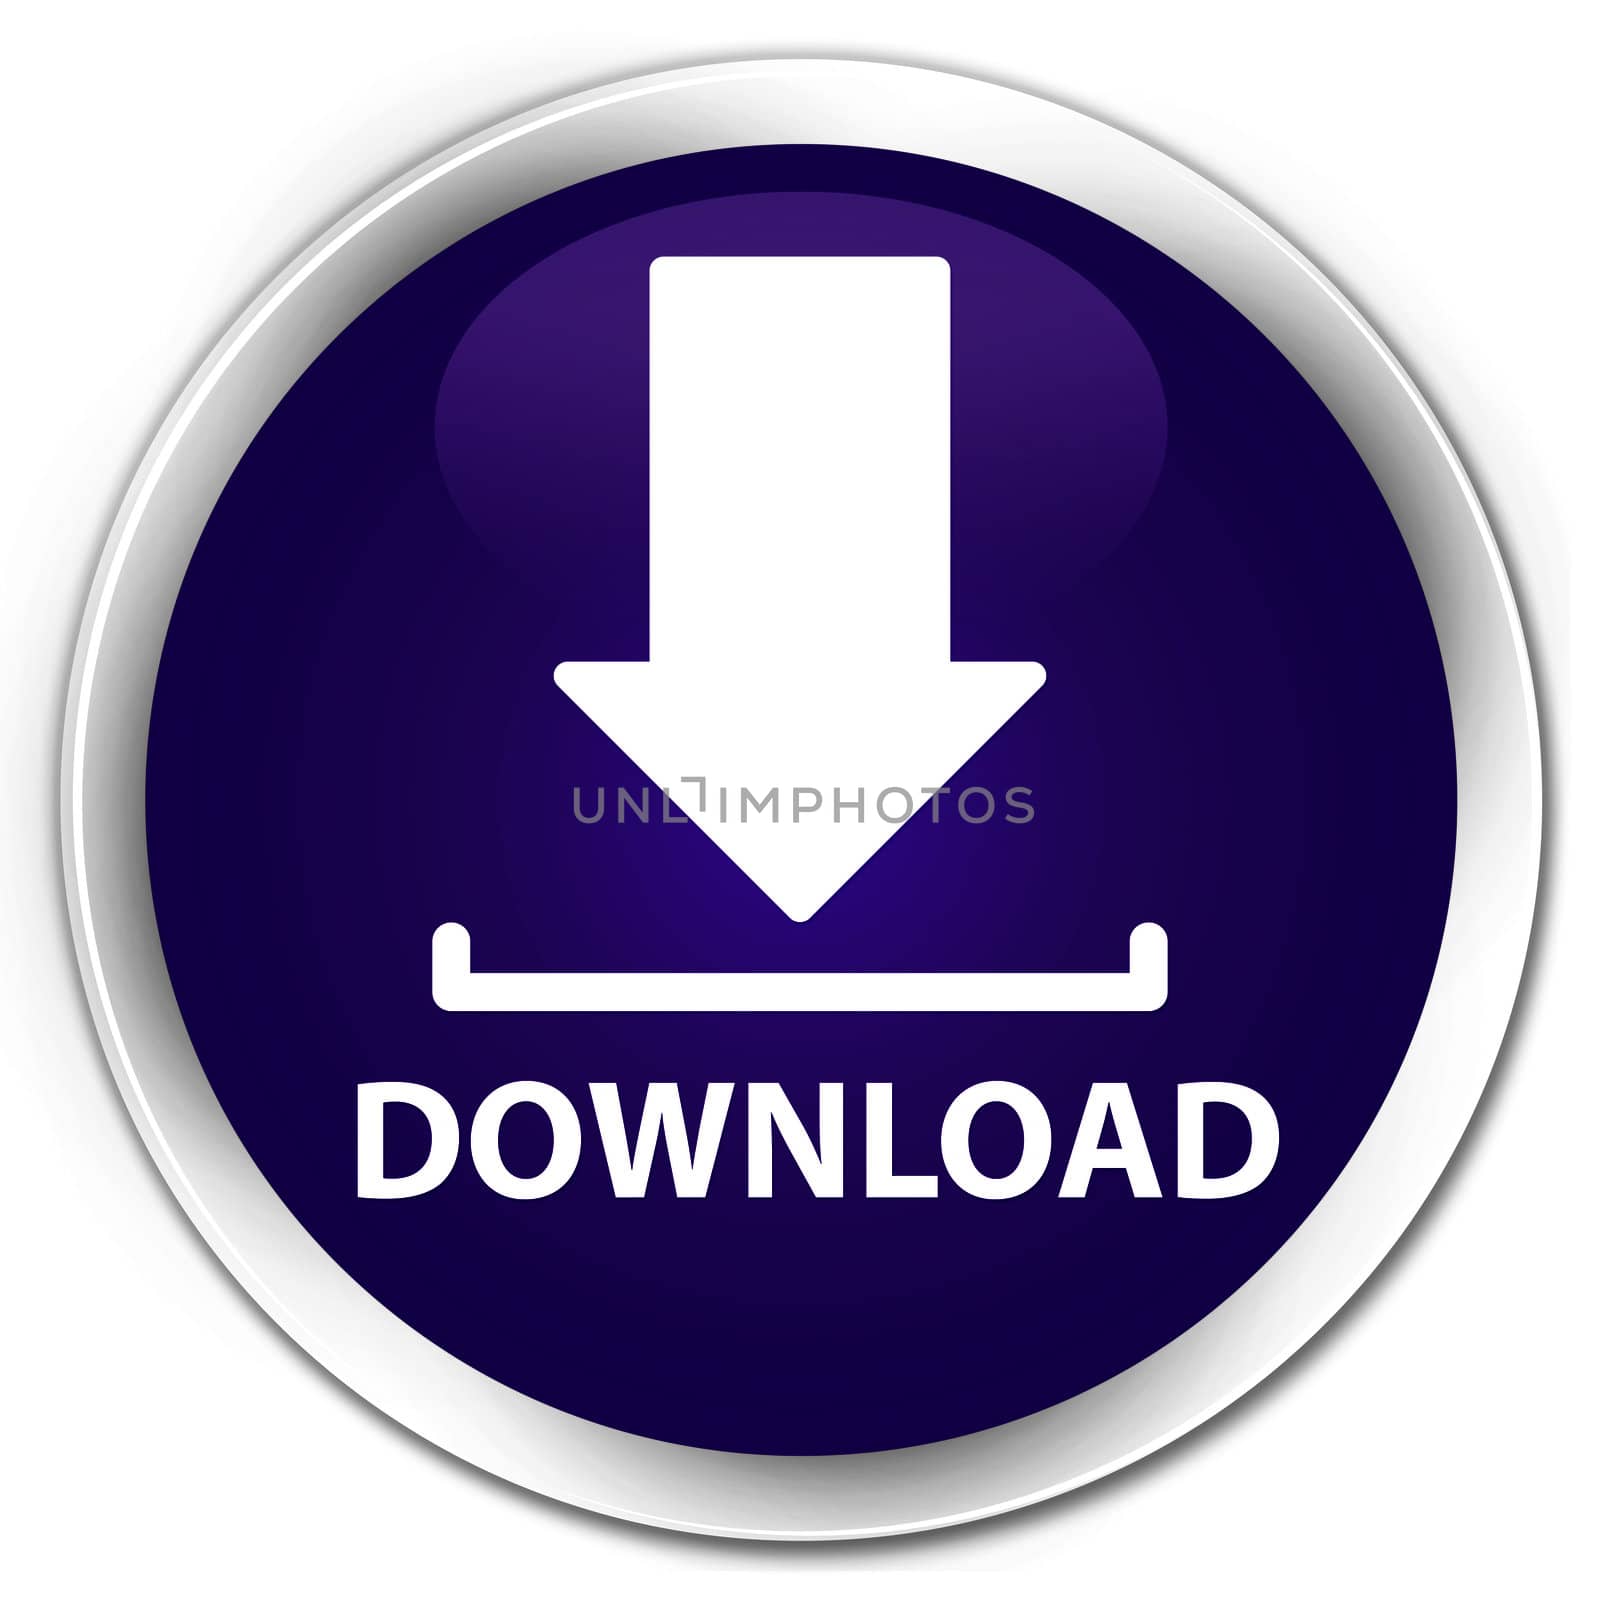 Download glossy purple round button